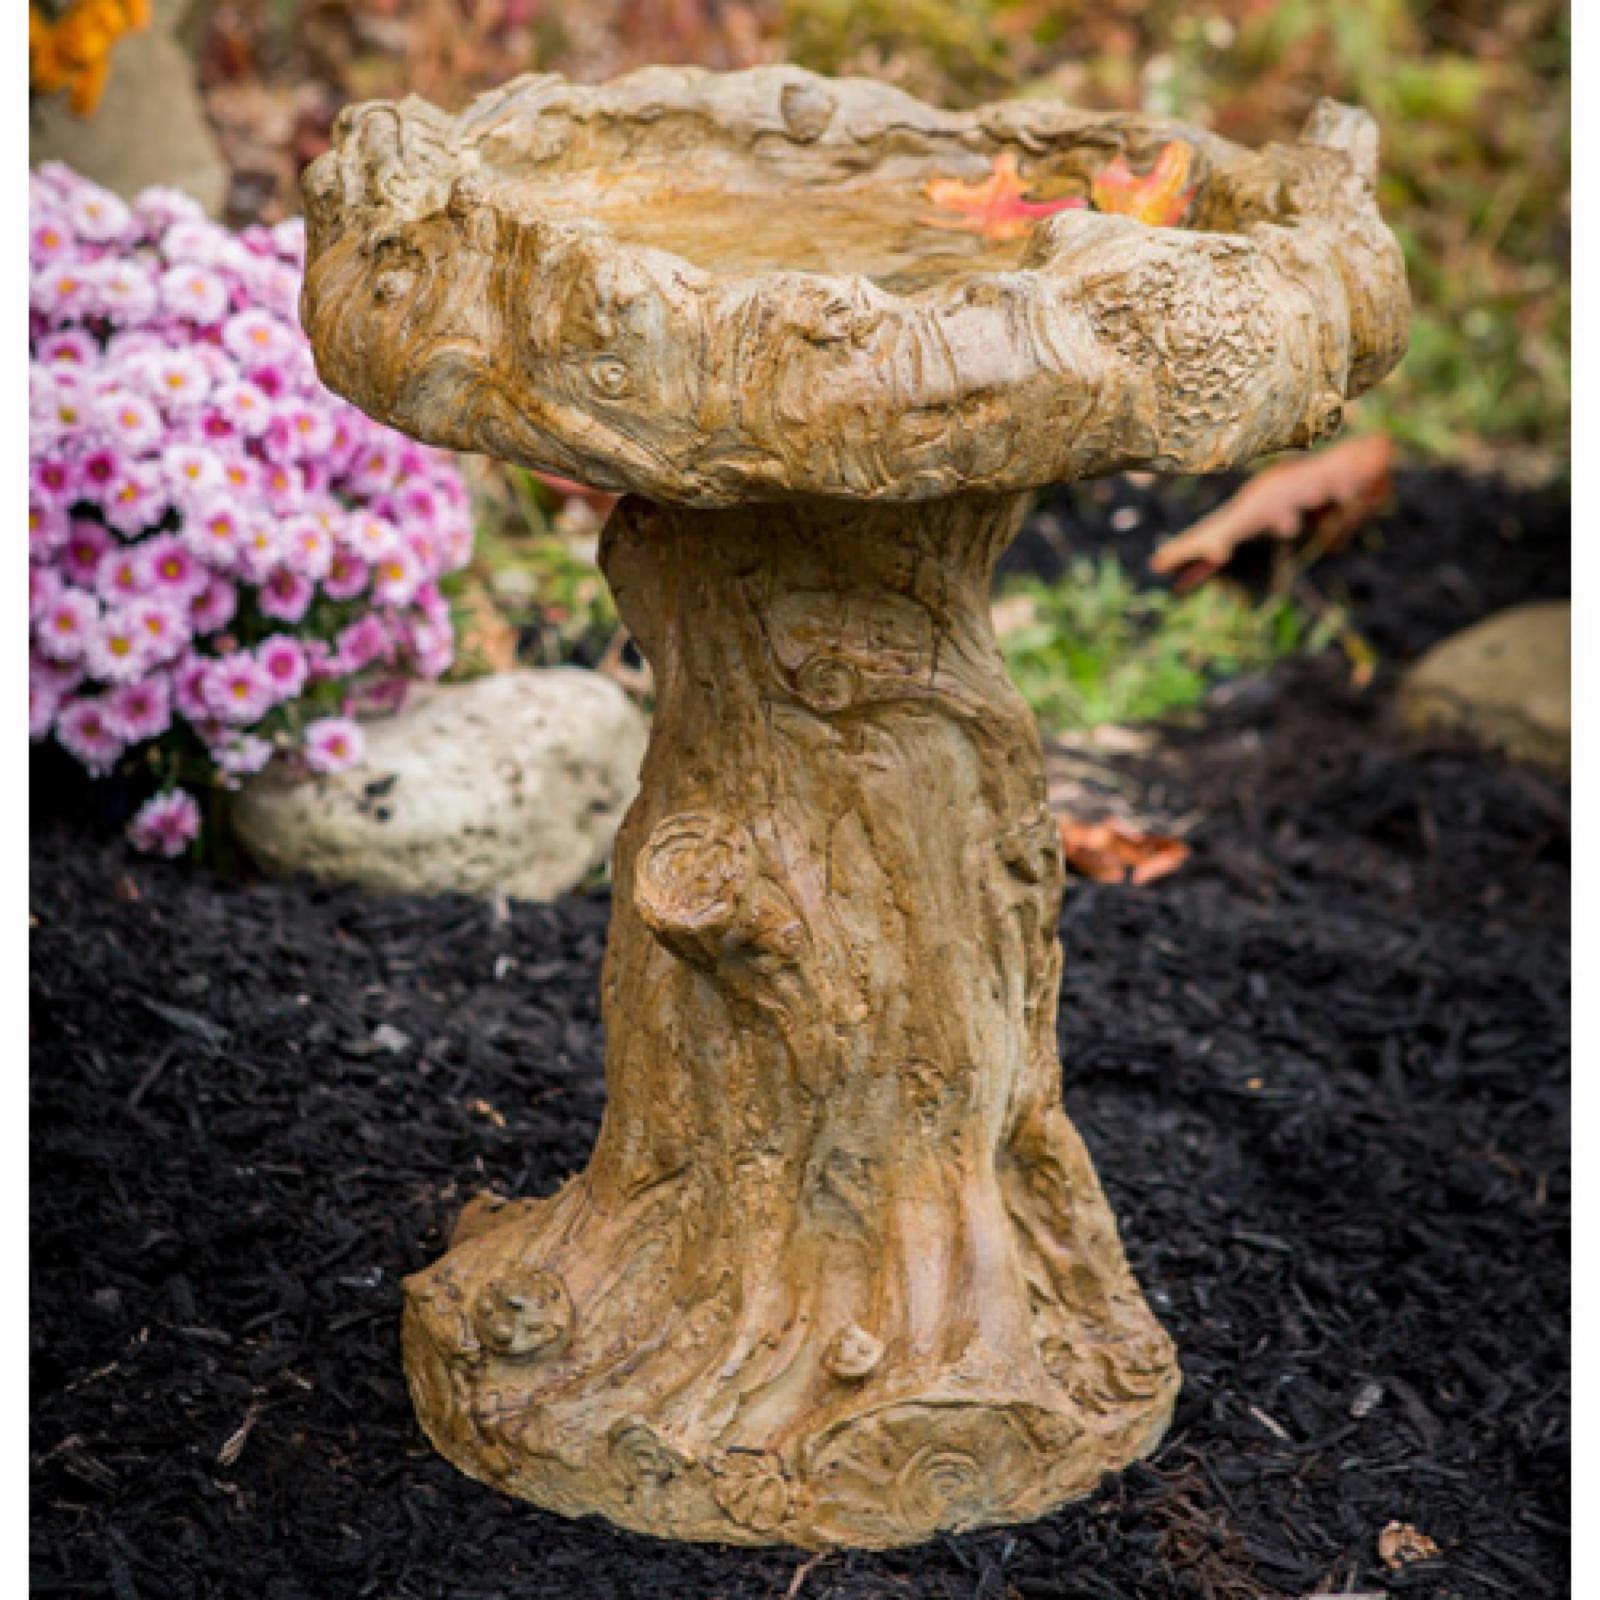 Athena Garden Cast Stone Log Bird Bath - image 3 of 3